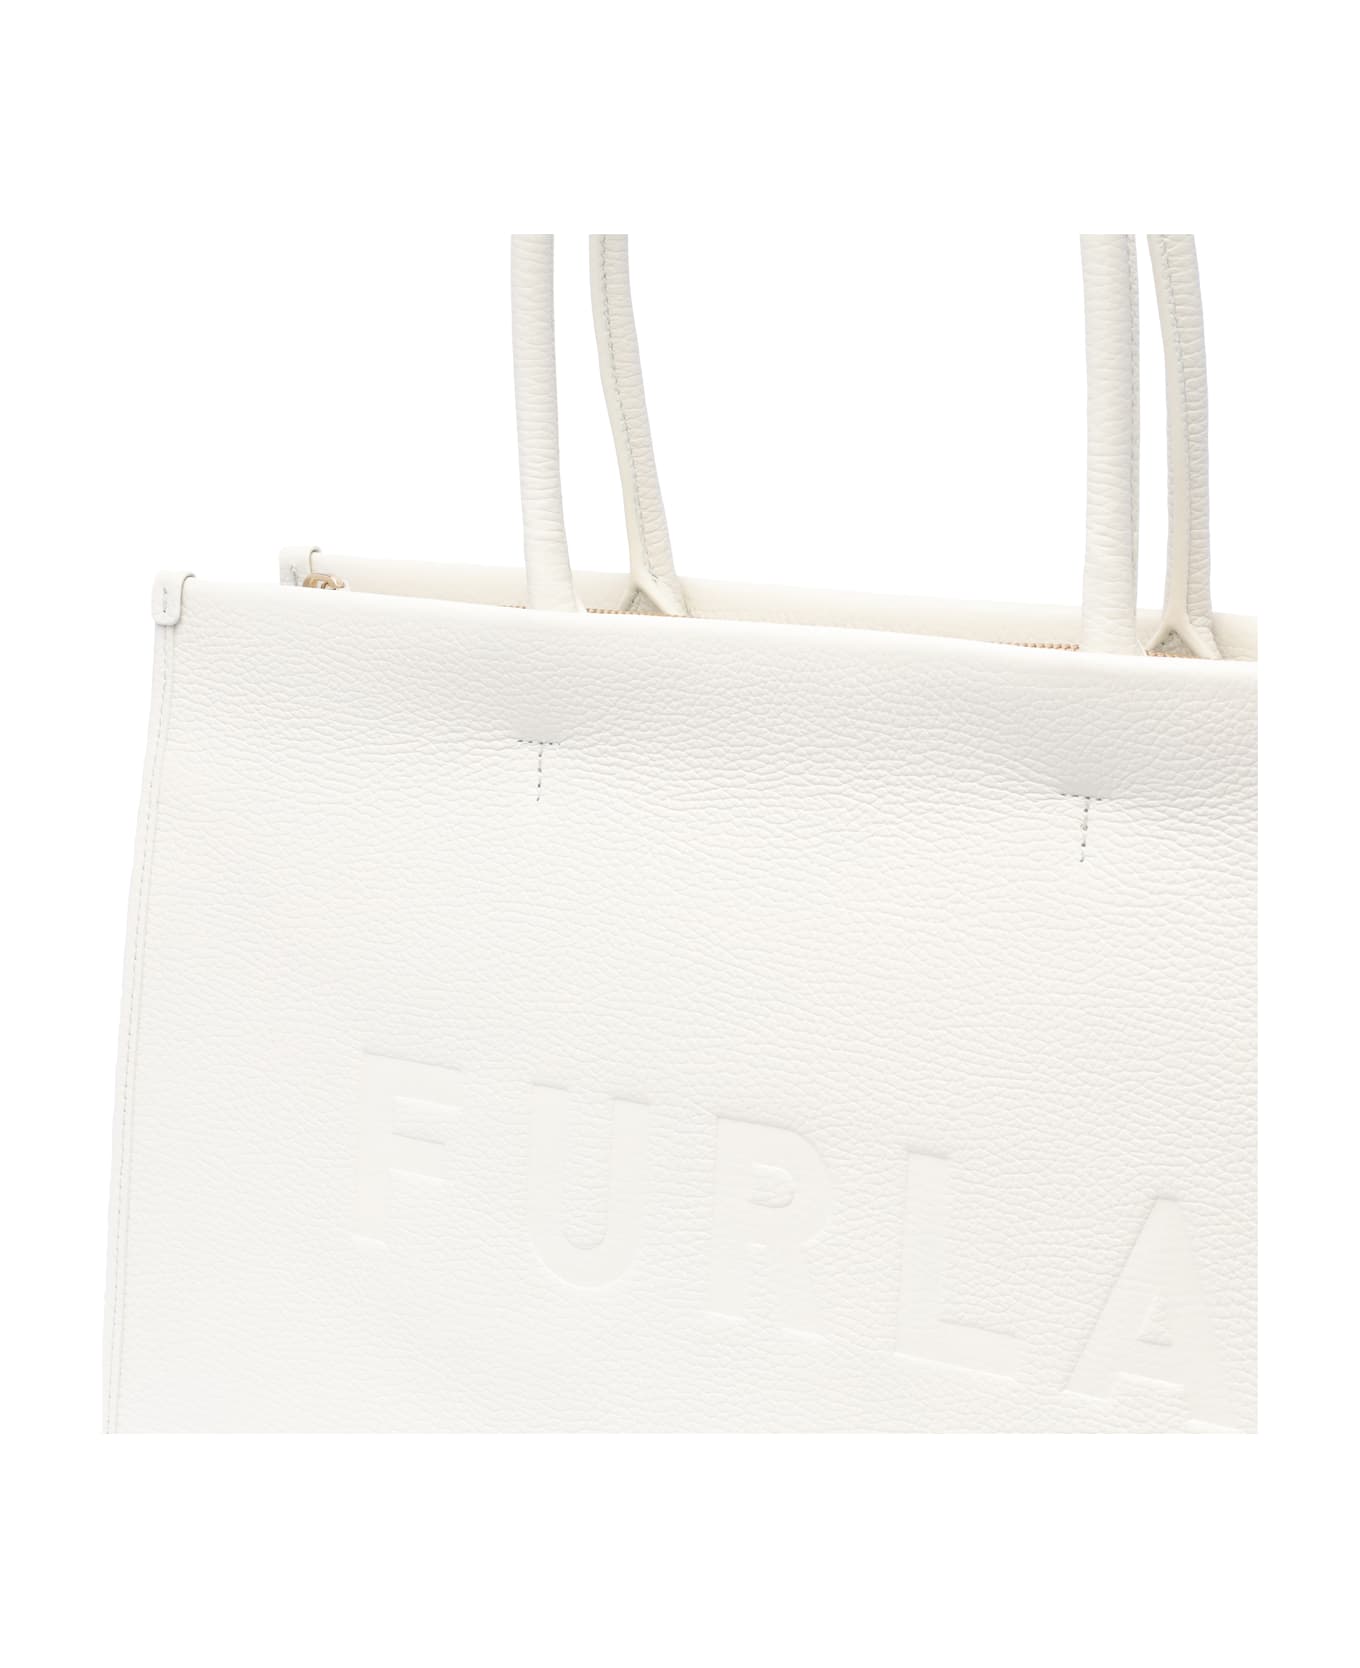 Furla Opportunity Tote Bag - White